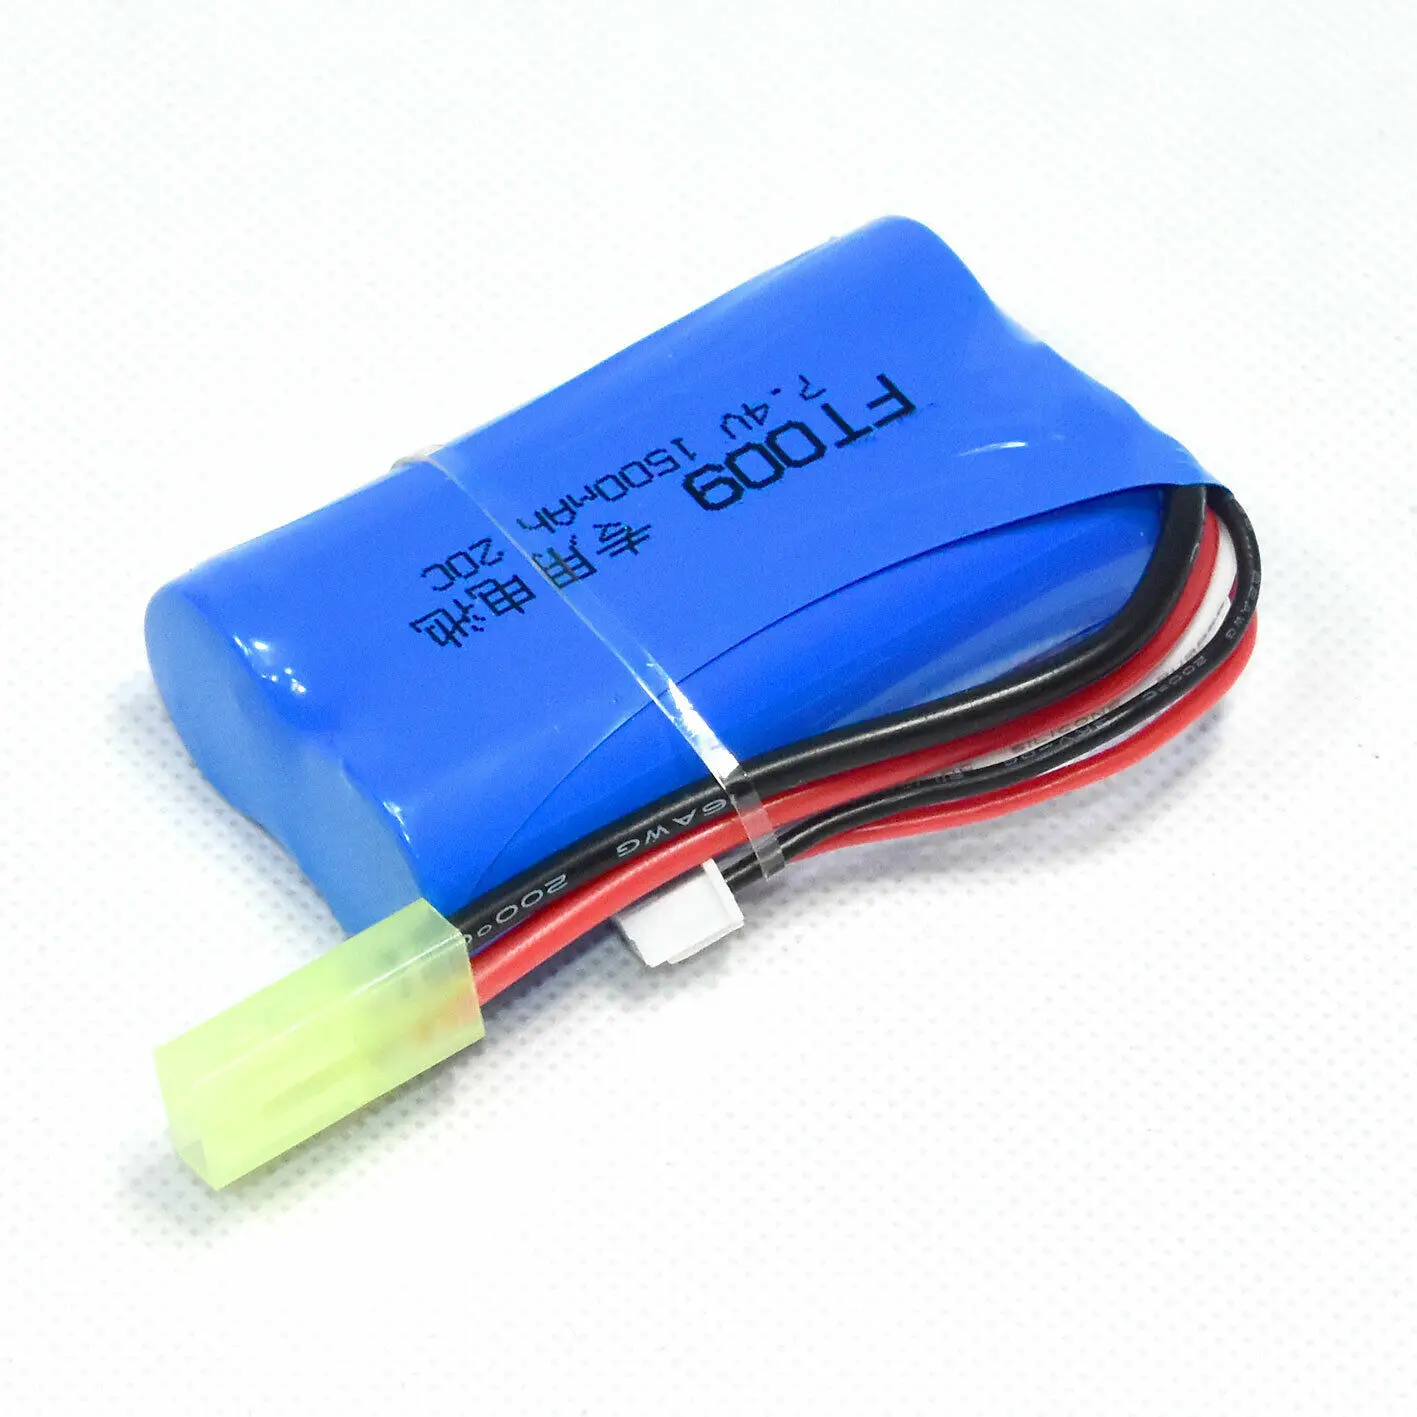 Mini battery. Аккумулятор мини Тамия. Dpx18650c15-1500. FPV 18650. Мини аккумулятор.